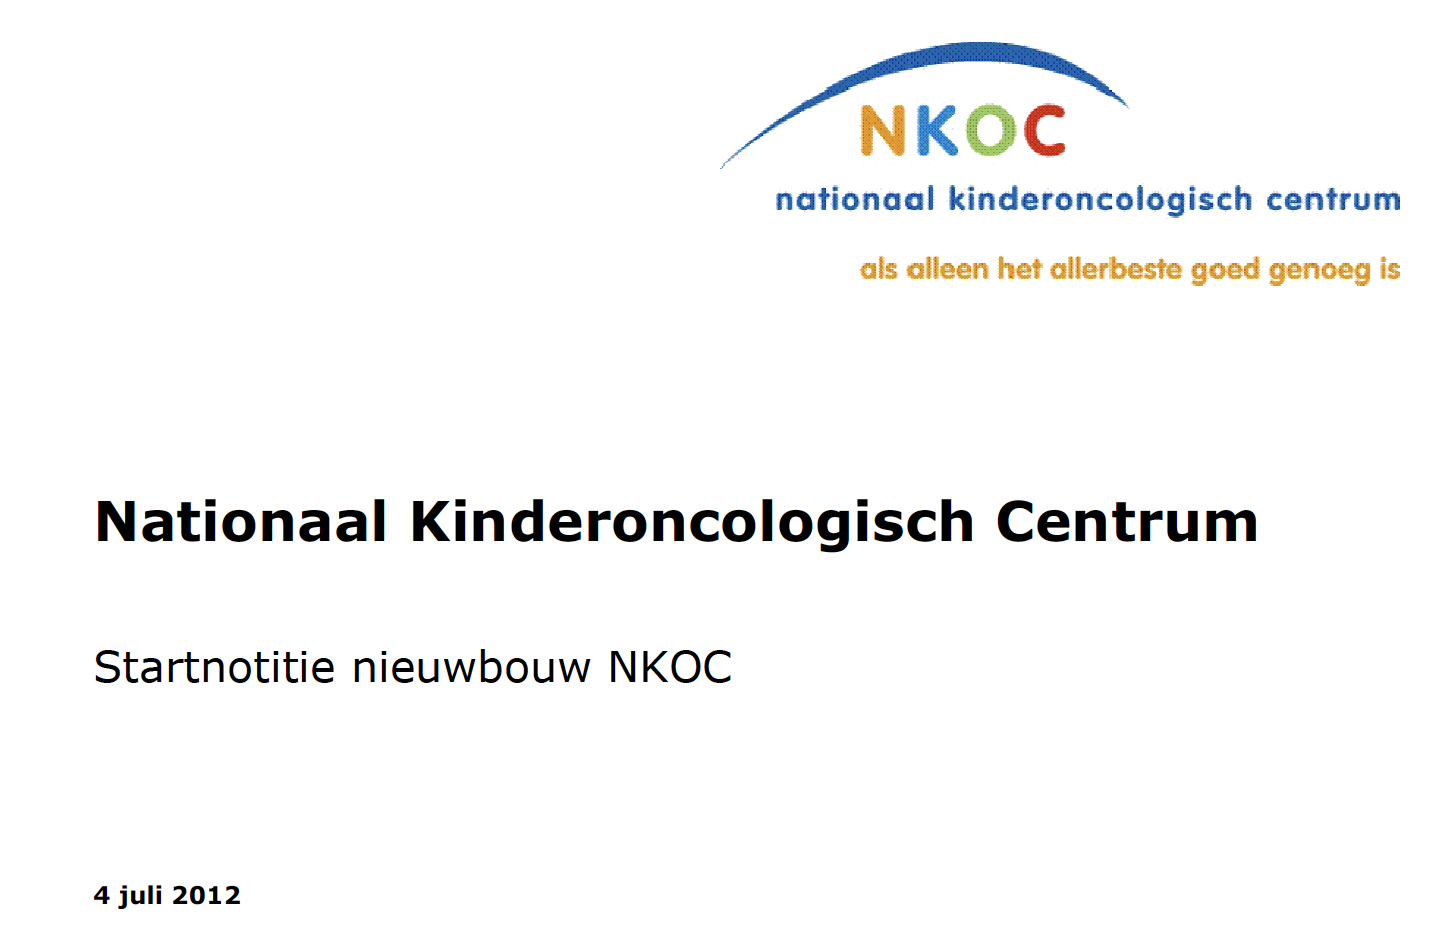 NKOC position paper